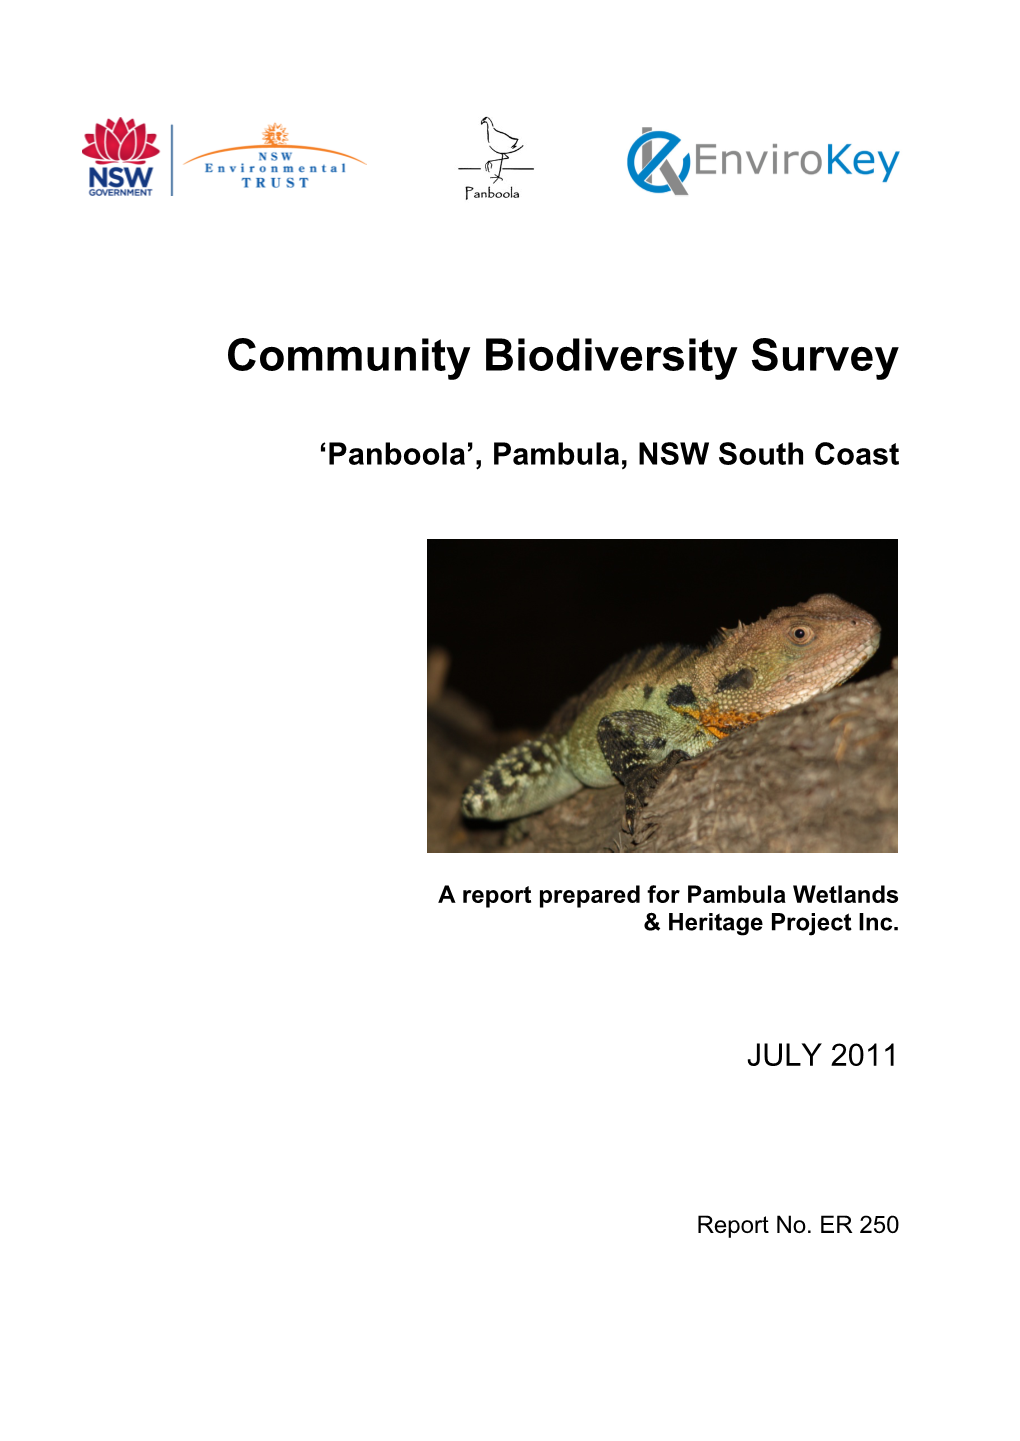 Community Biodiversity Survey 'Panboola'